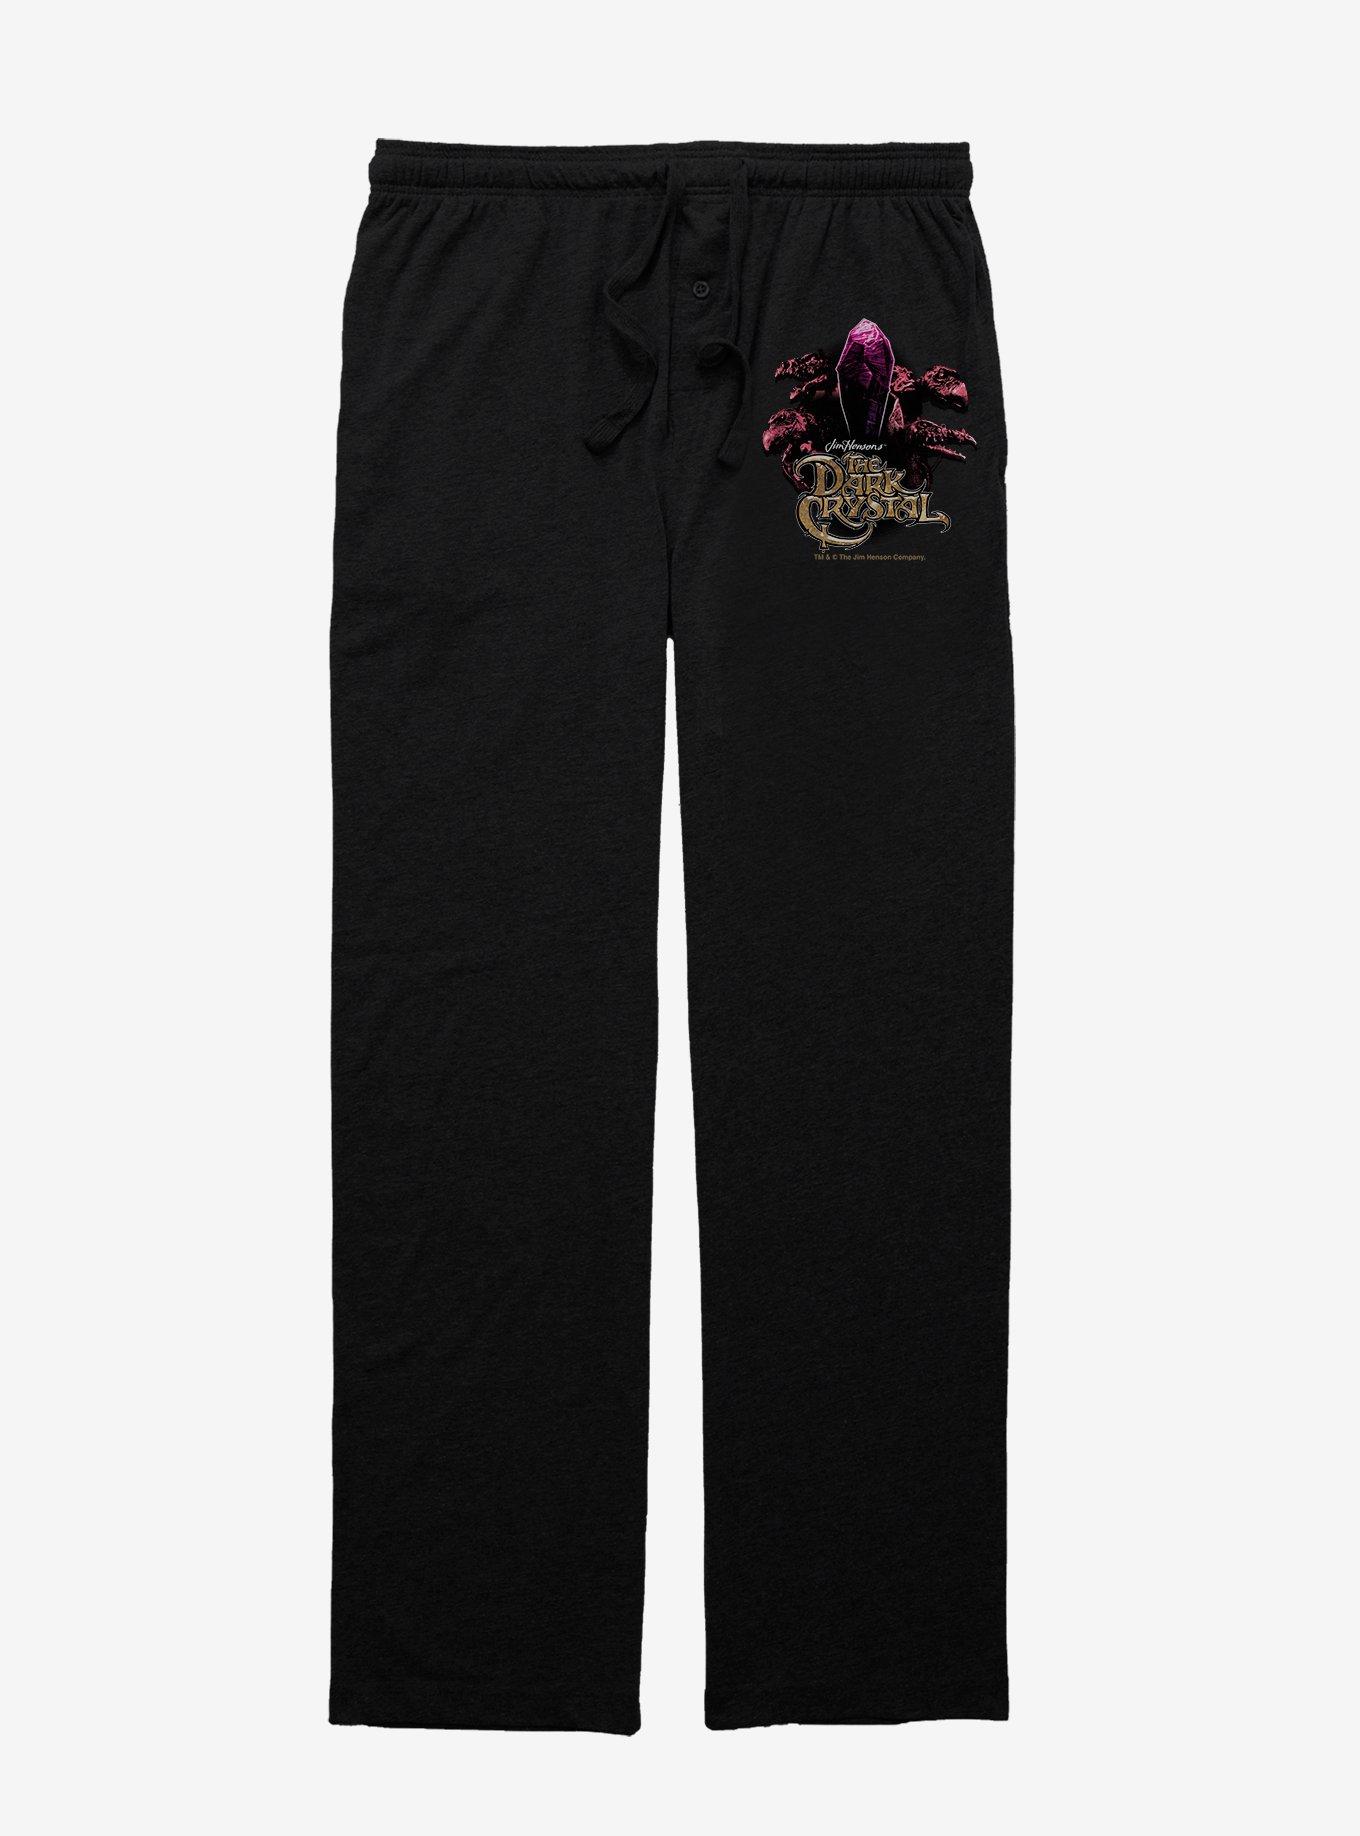 Jim Henson's The Dark Crystal Pajama Pants